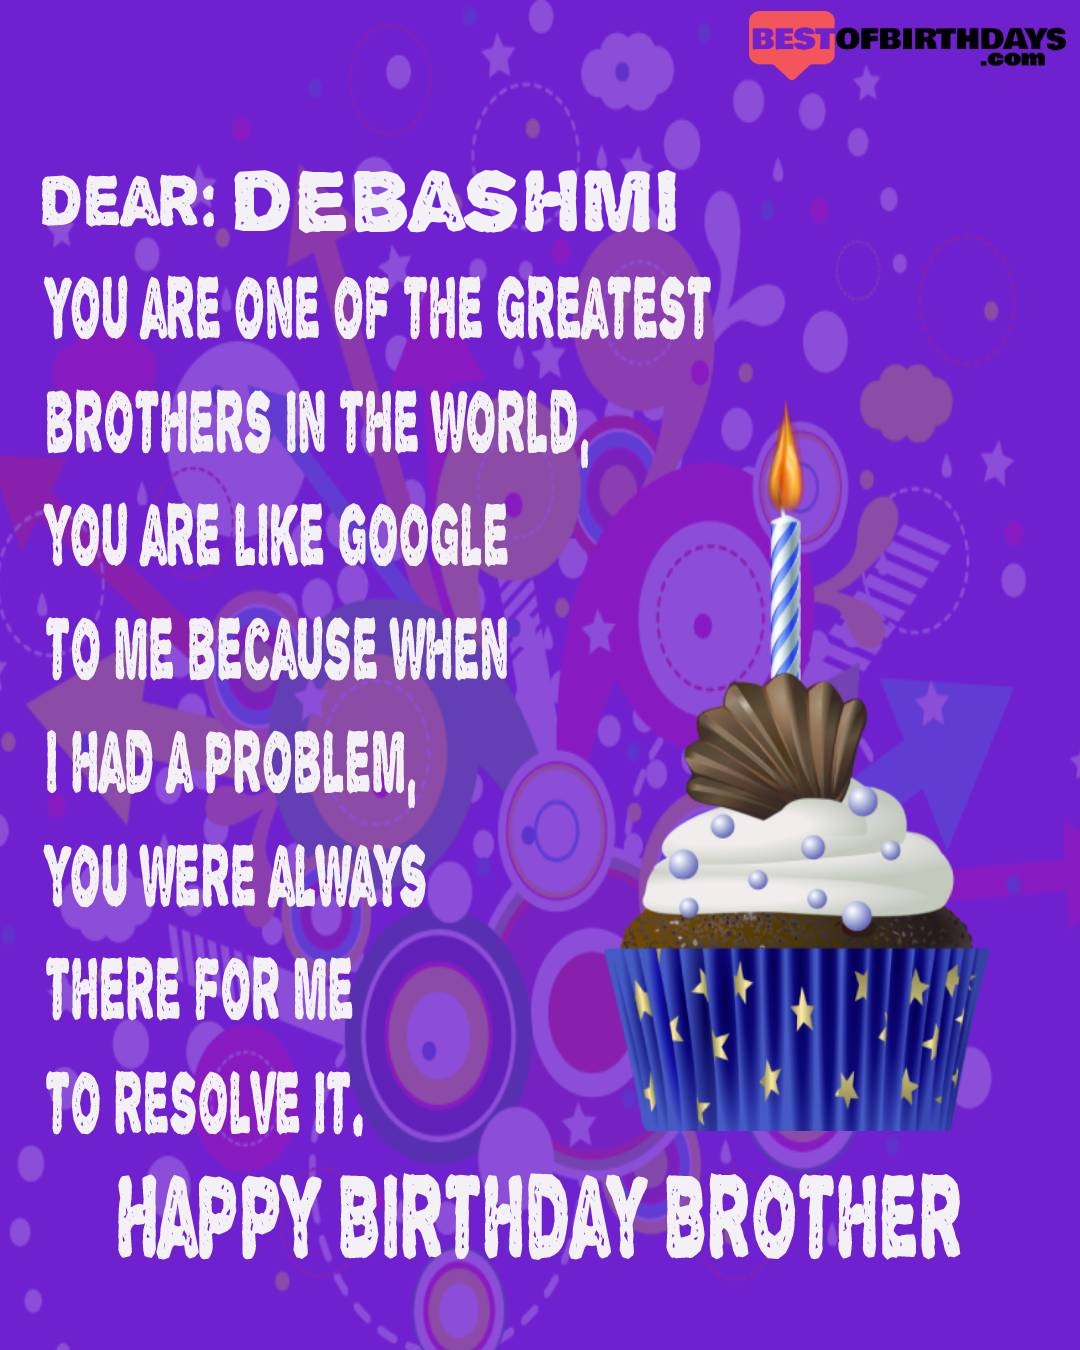 Happy birthday debashmi bhai brother bro